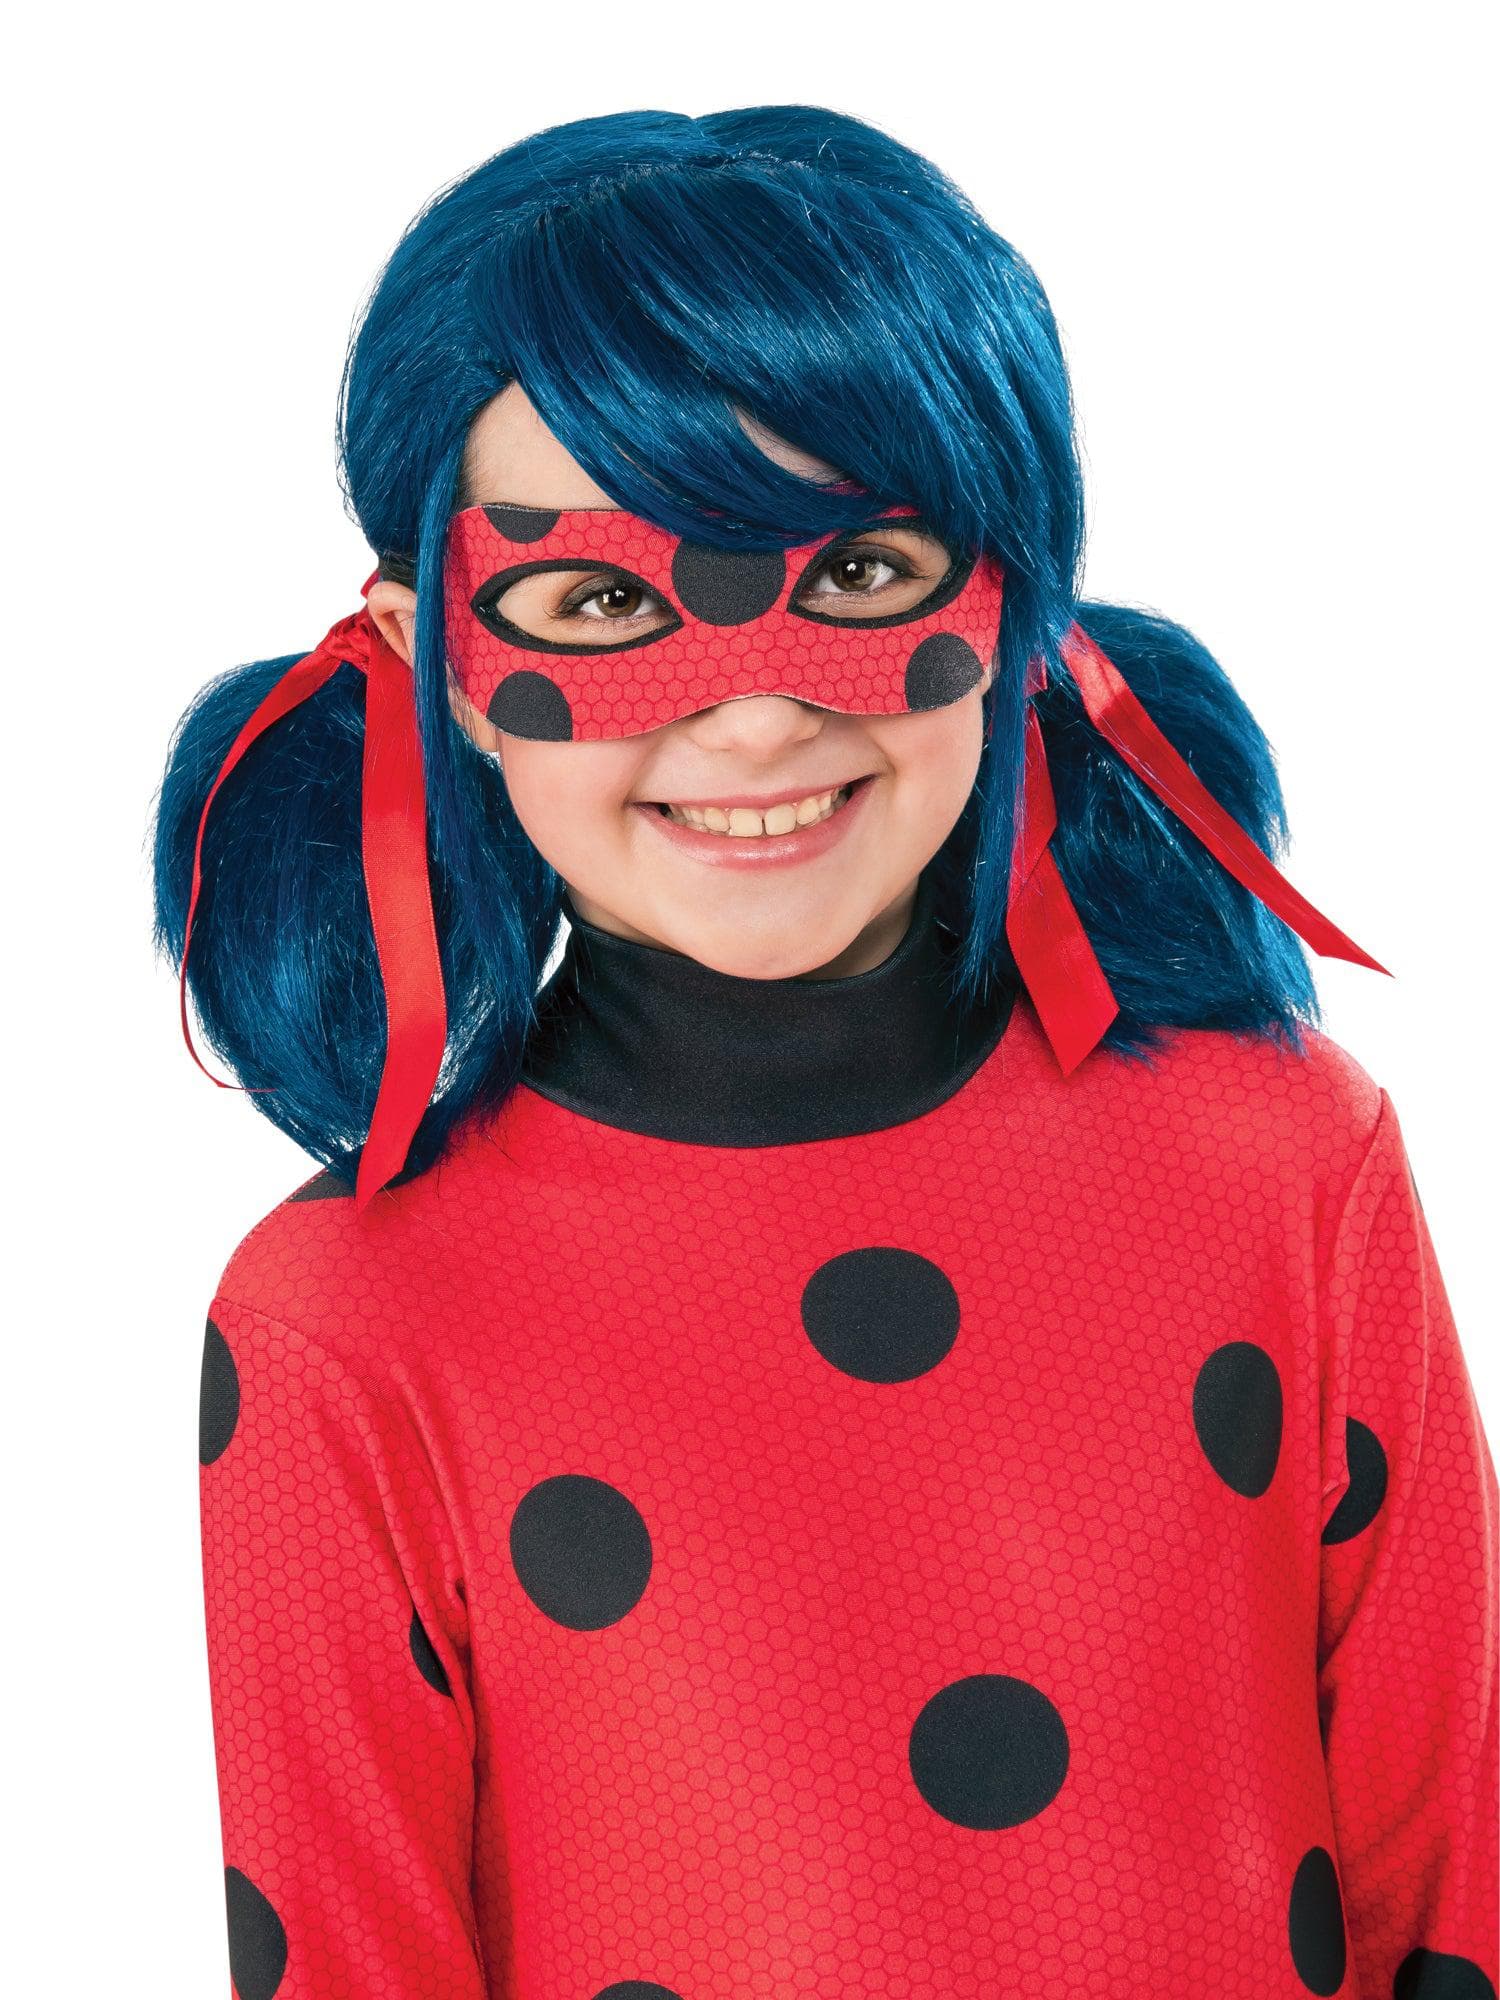 Girls' Miraculous Ladybug Blue Wig - costumes.com